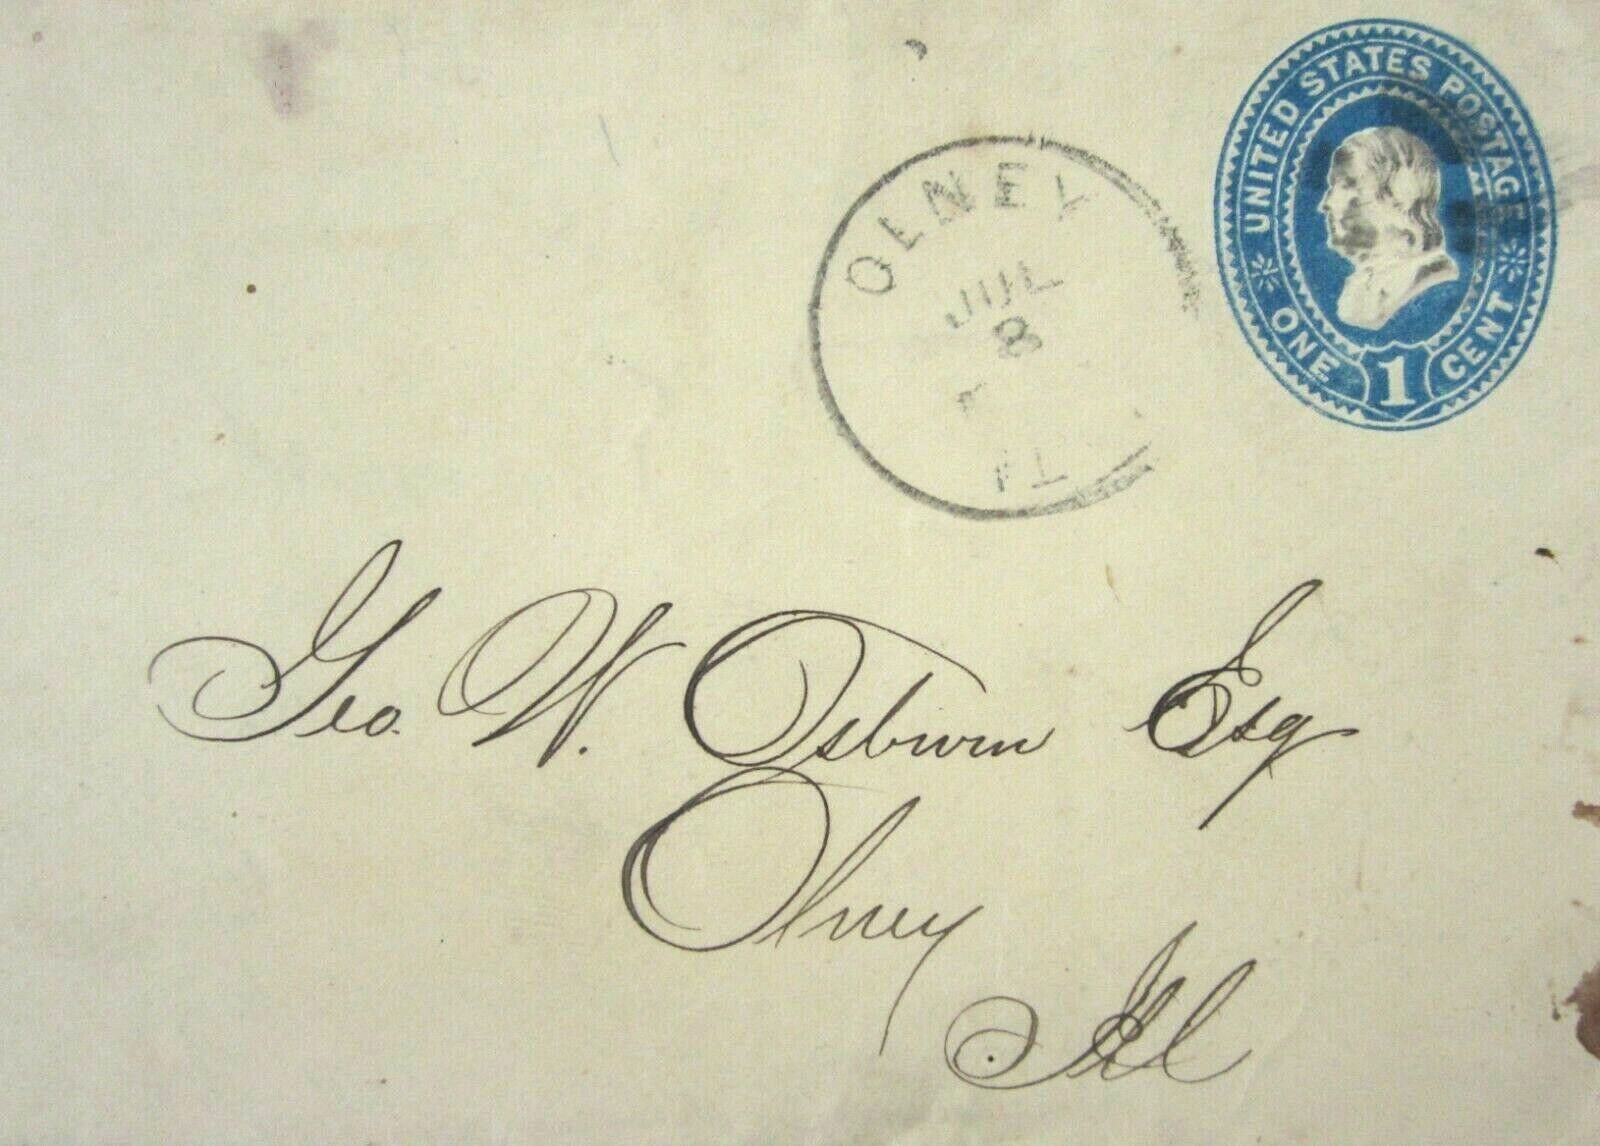 Olney Bank Richland County Illinois History Promissory Note Stamp Envelope 1889